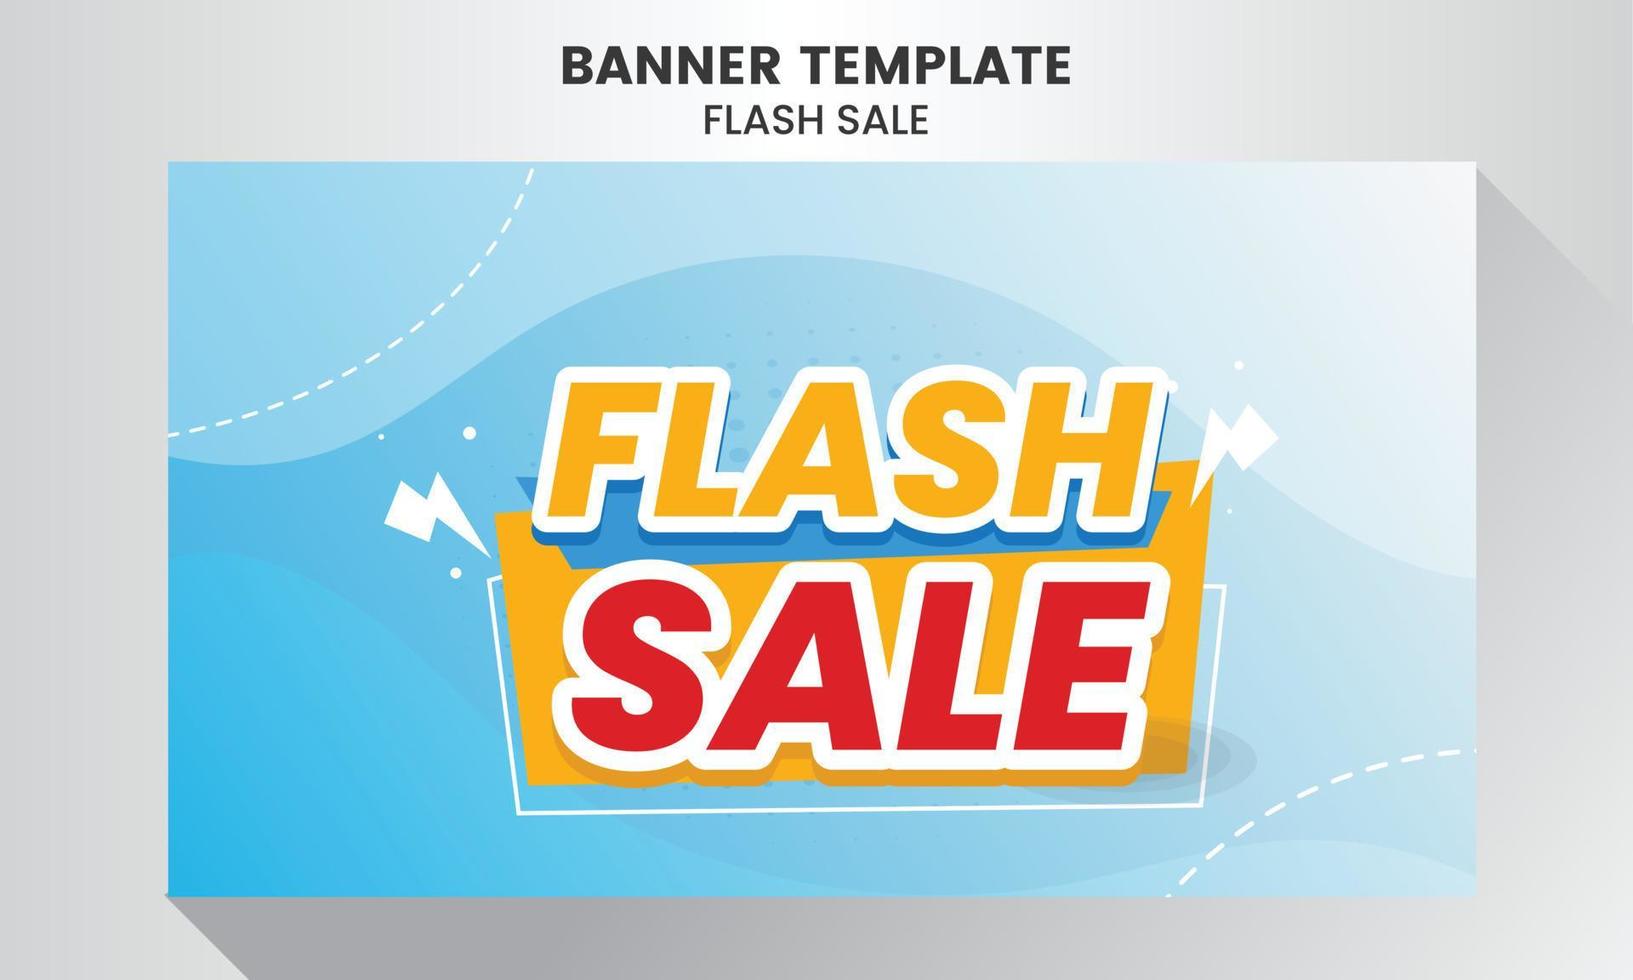 cartel o banner de compras de venta flash con texto 3d. diseño de plantilla de banner de ventas flash. oferta especial campaña de venta flash o promoción. vector